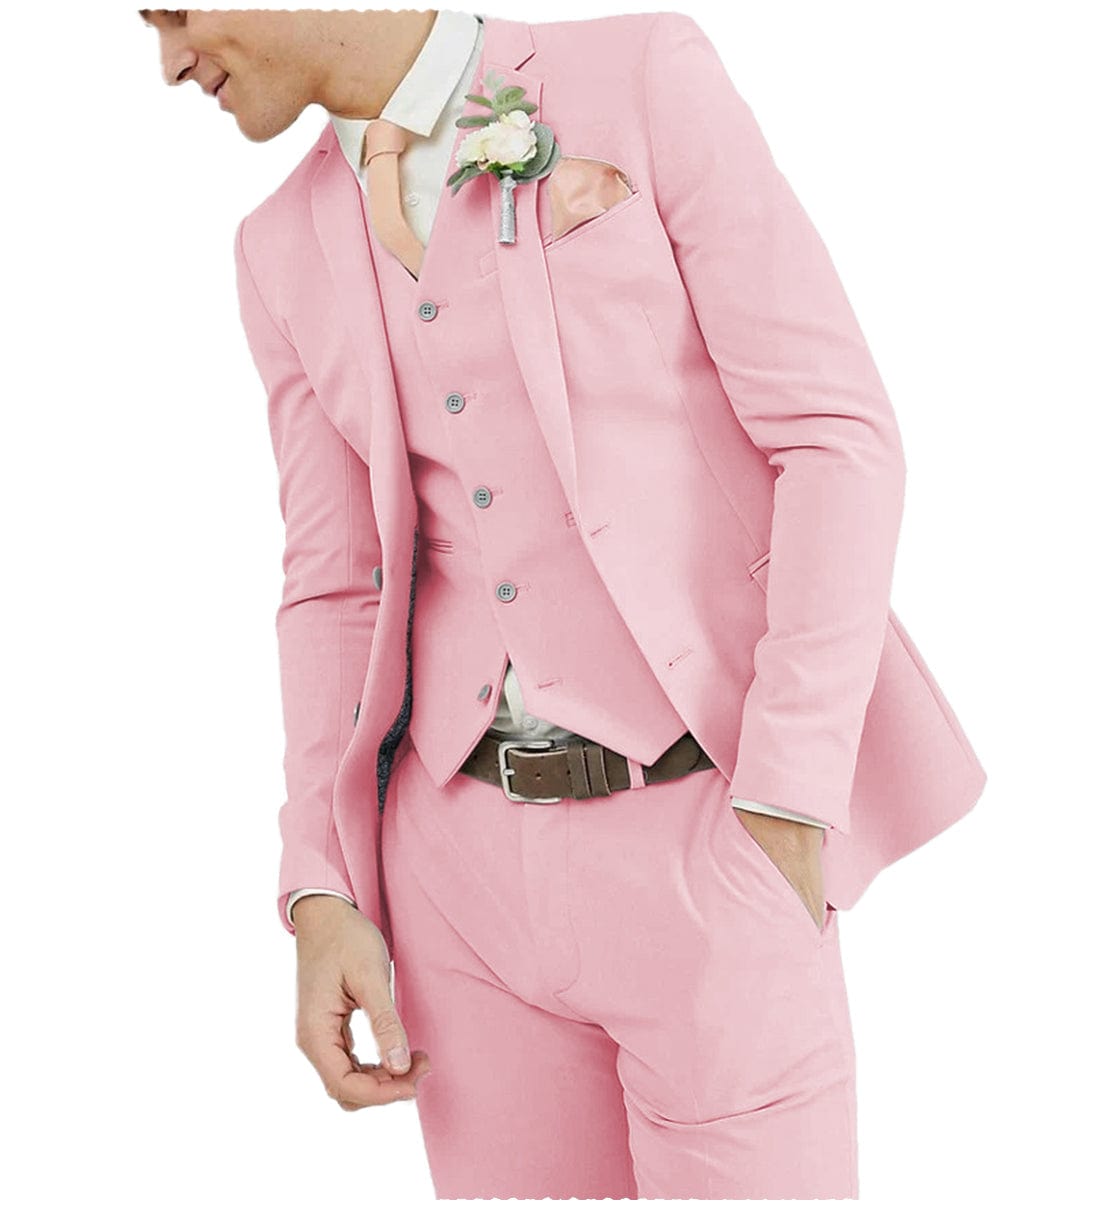 ceehuteey Formal 3 pieces Mens Suit Blazer For Wedding (Blazer+ Vest +Pants)